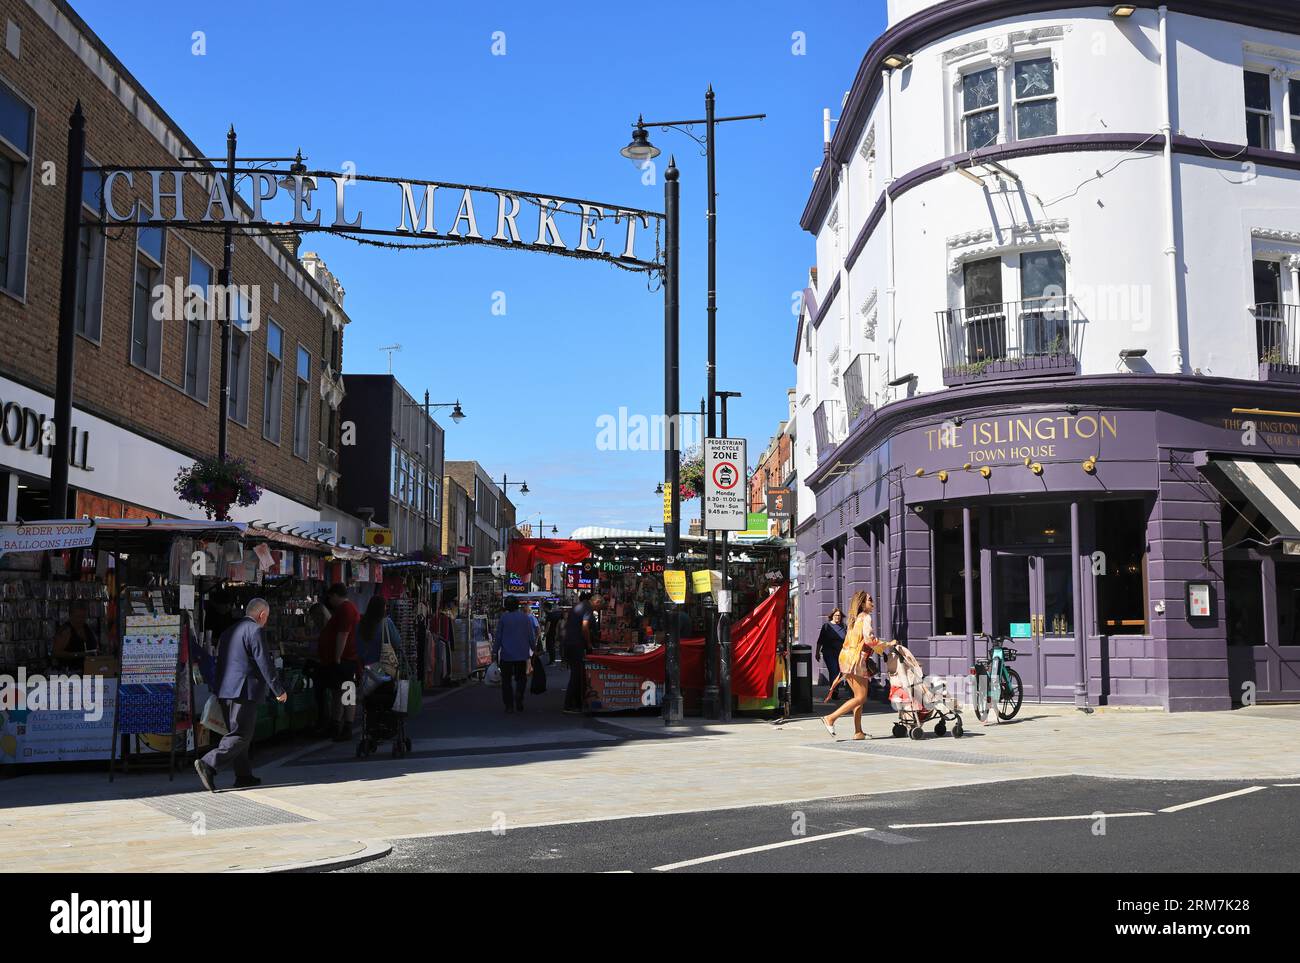 Chapel Street Market in der Nähe von Angel in Islington, im Norden Londons, Großbritannien Stockfoto